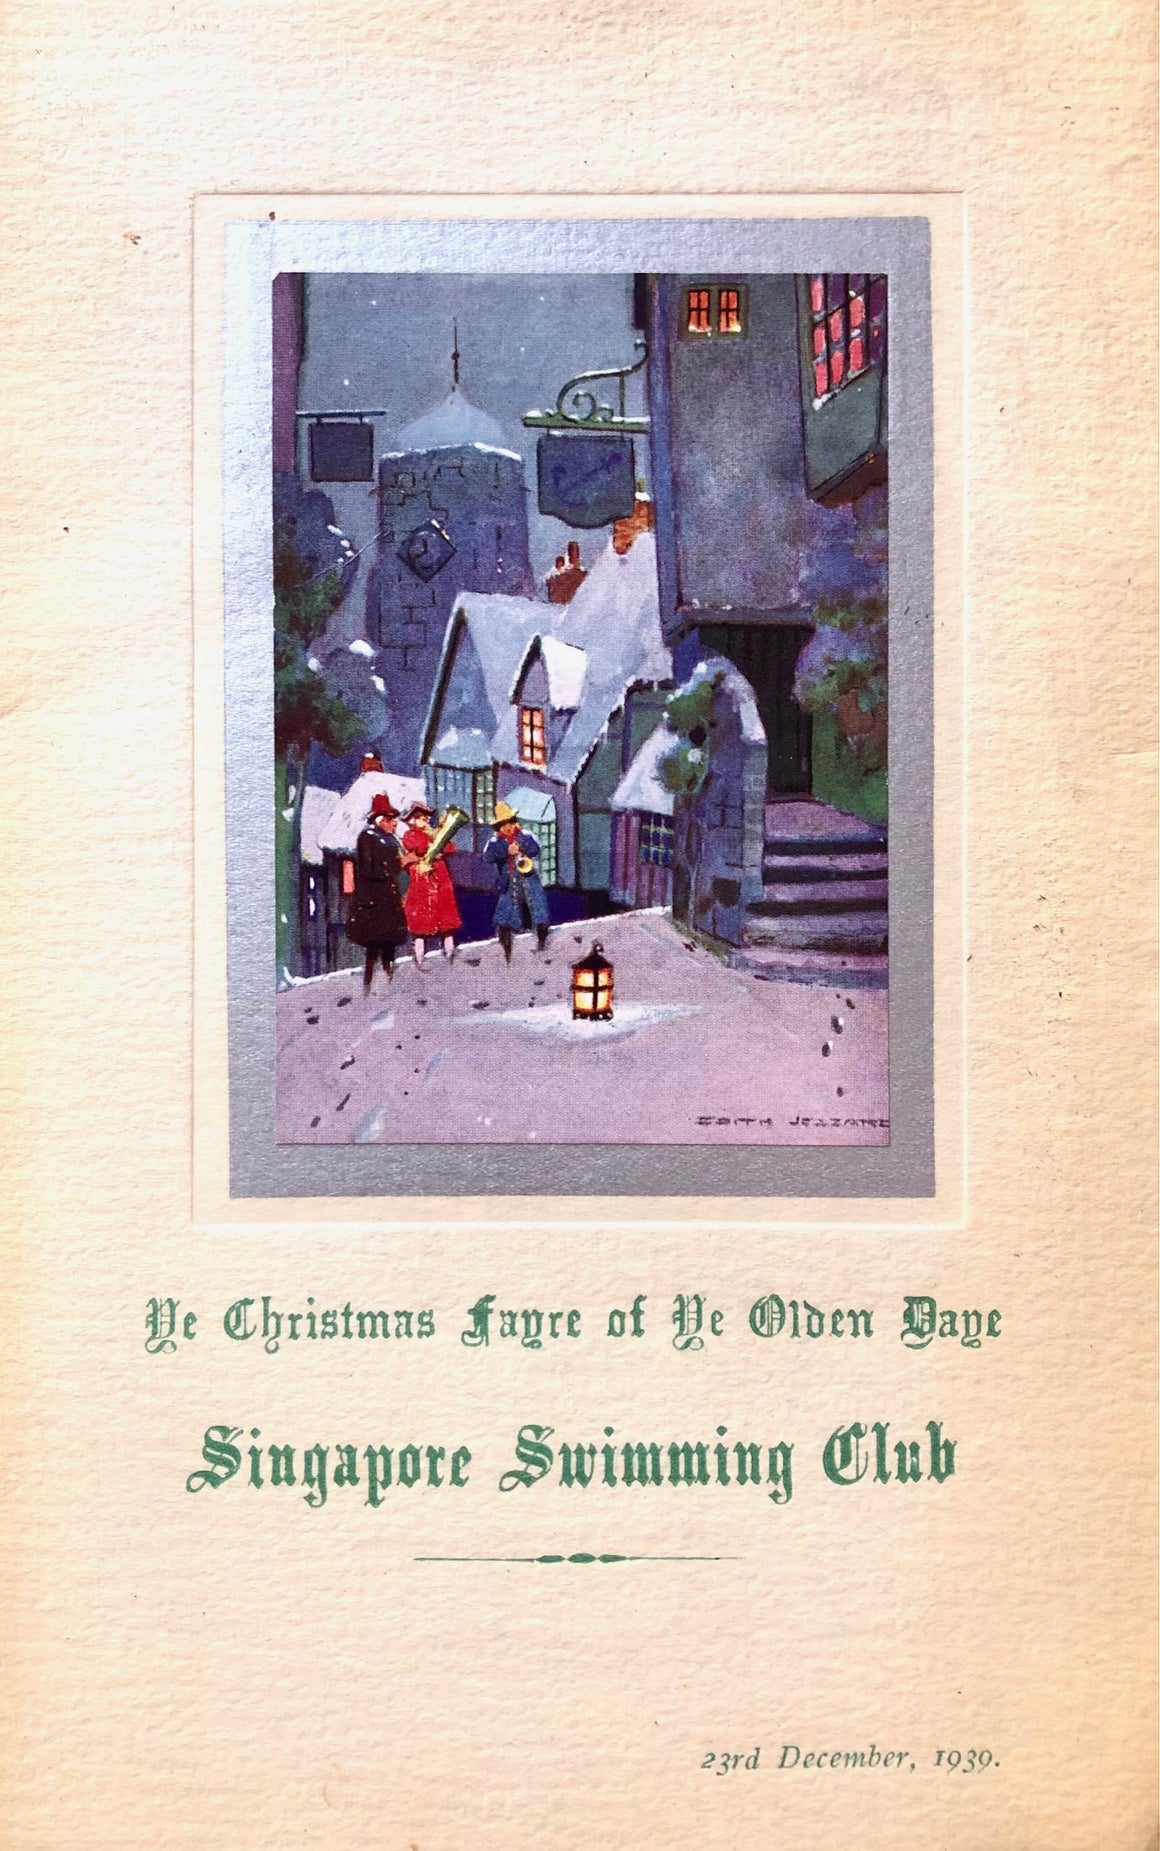 (Singapore) Singapore Swimming Club. Ye Christmas Fayre of Ye Olden Daye.